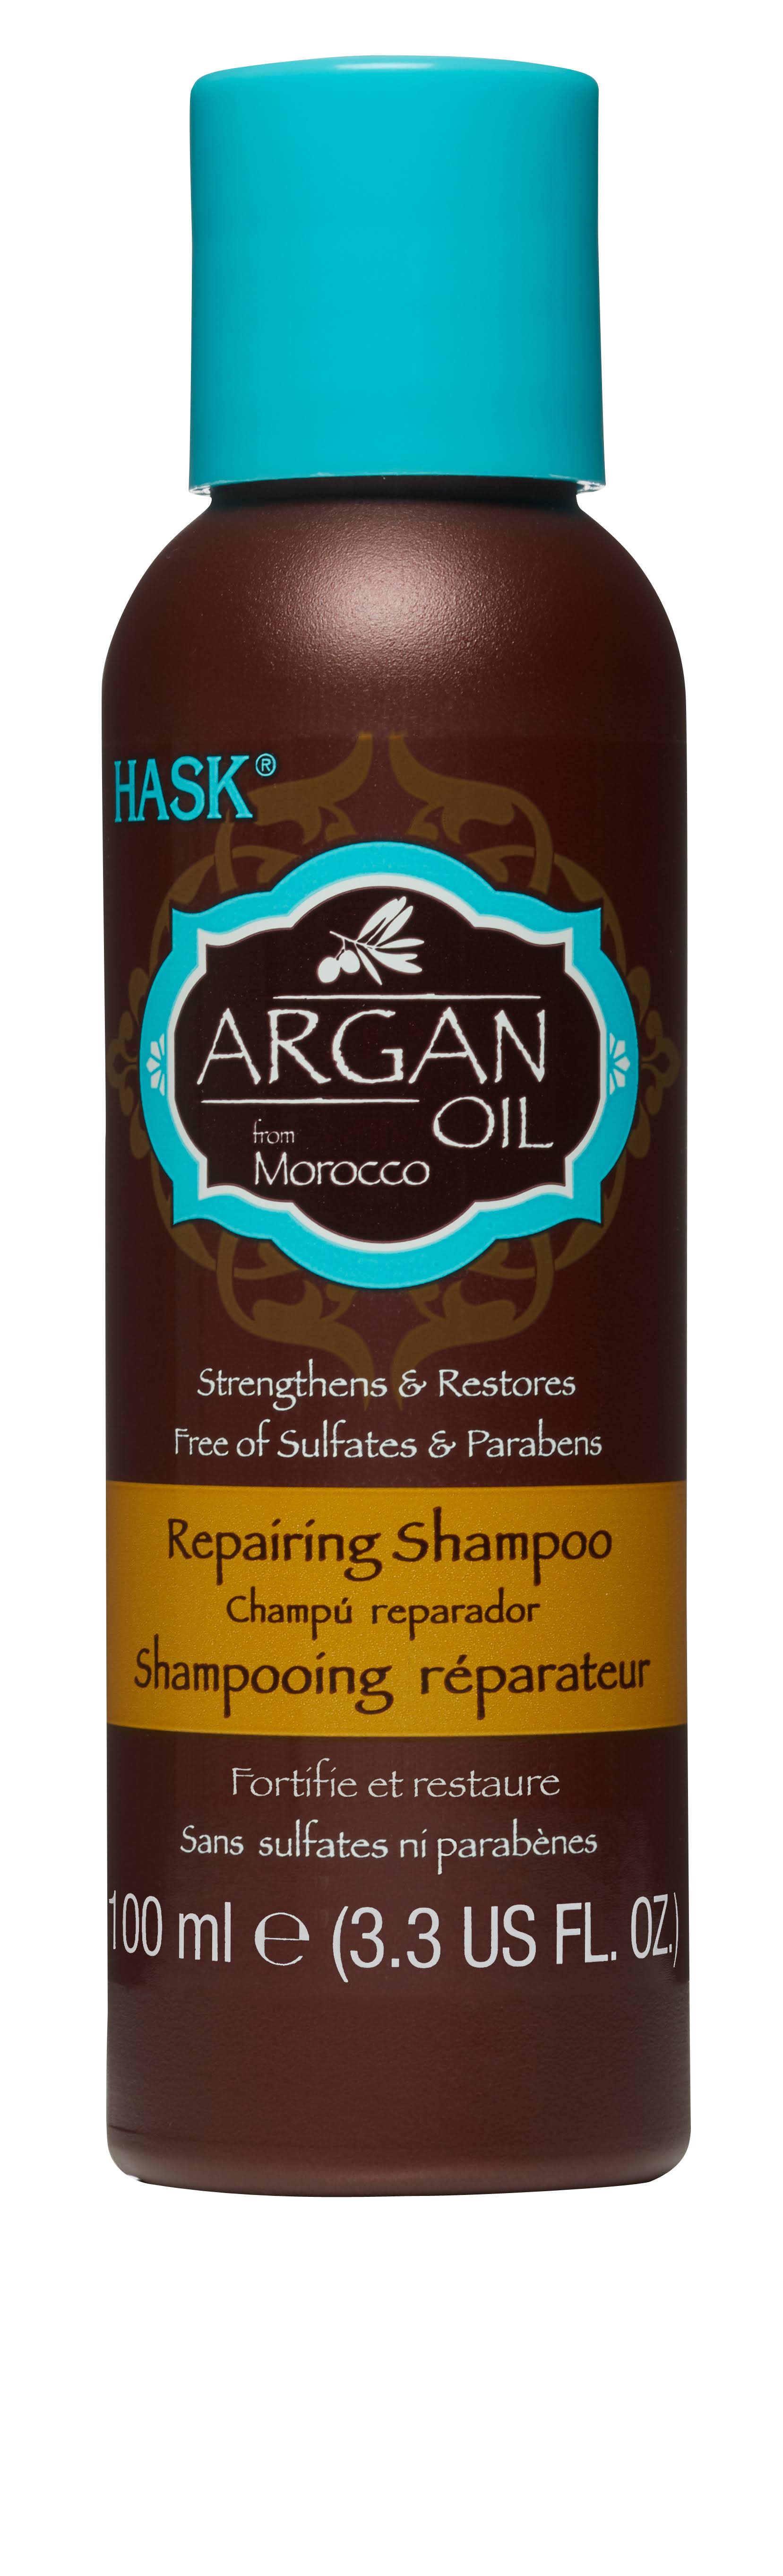 Hask Argan Oil Repairing Shampoo Travel Size 100 ml